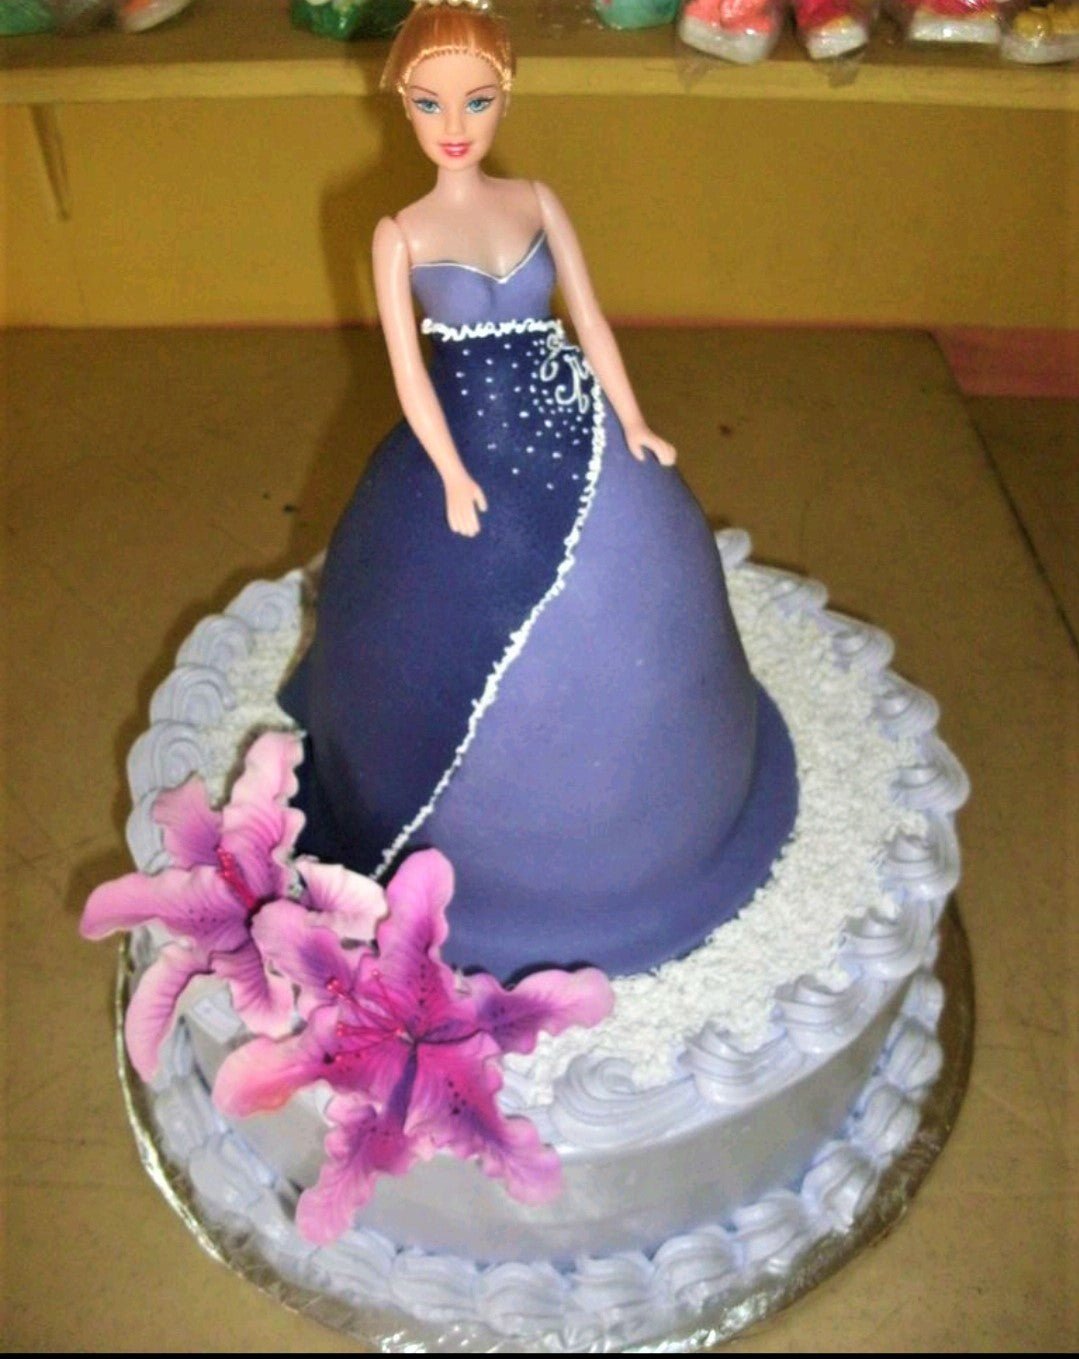 How to make Disney PRINCESS Doll CAKES - Cake decorating Ideas - YouTube